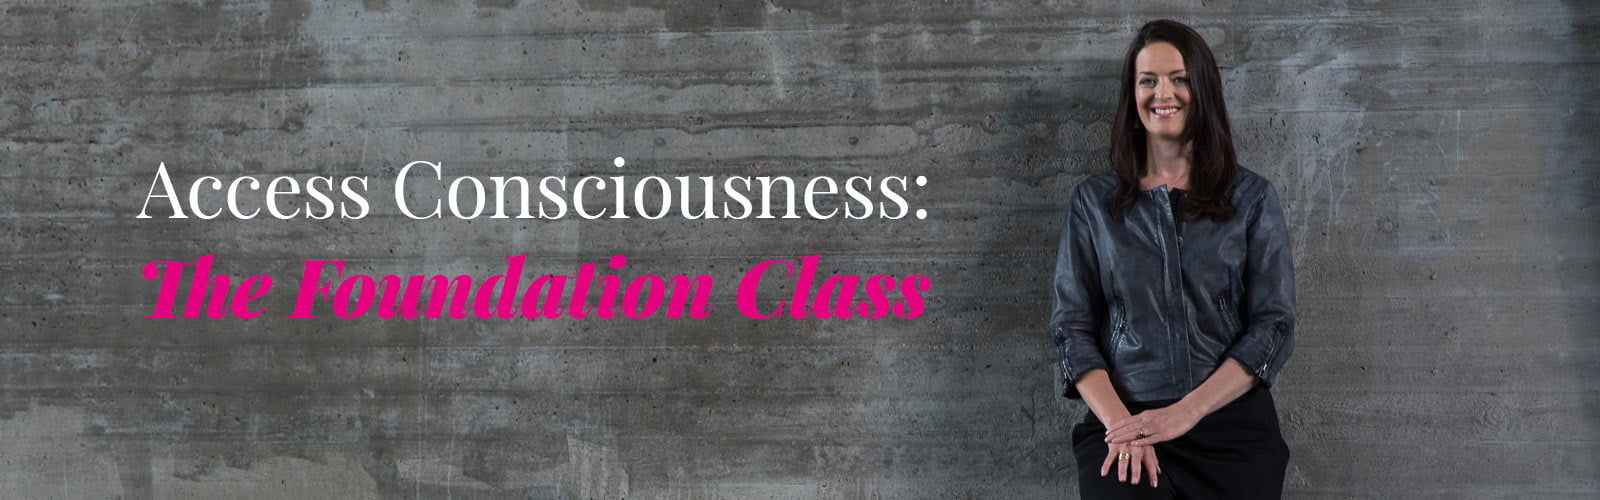 Access Consciousness - The Foundation Class